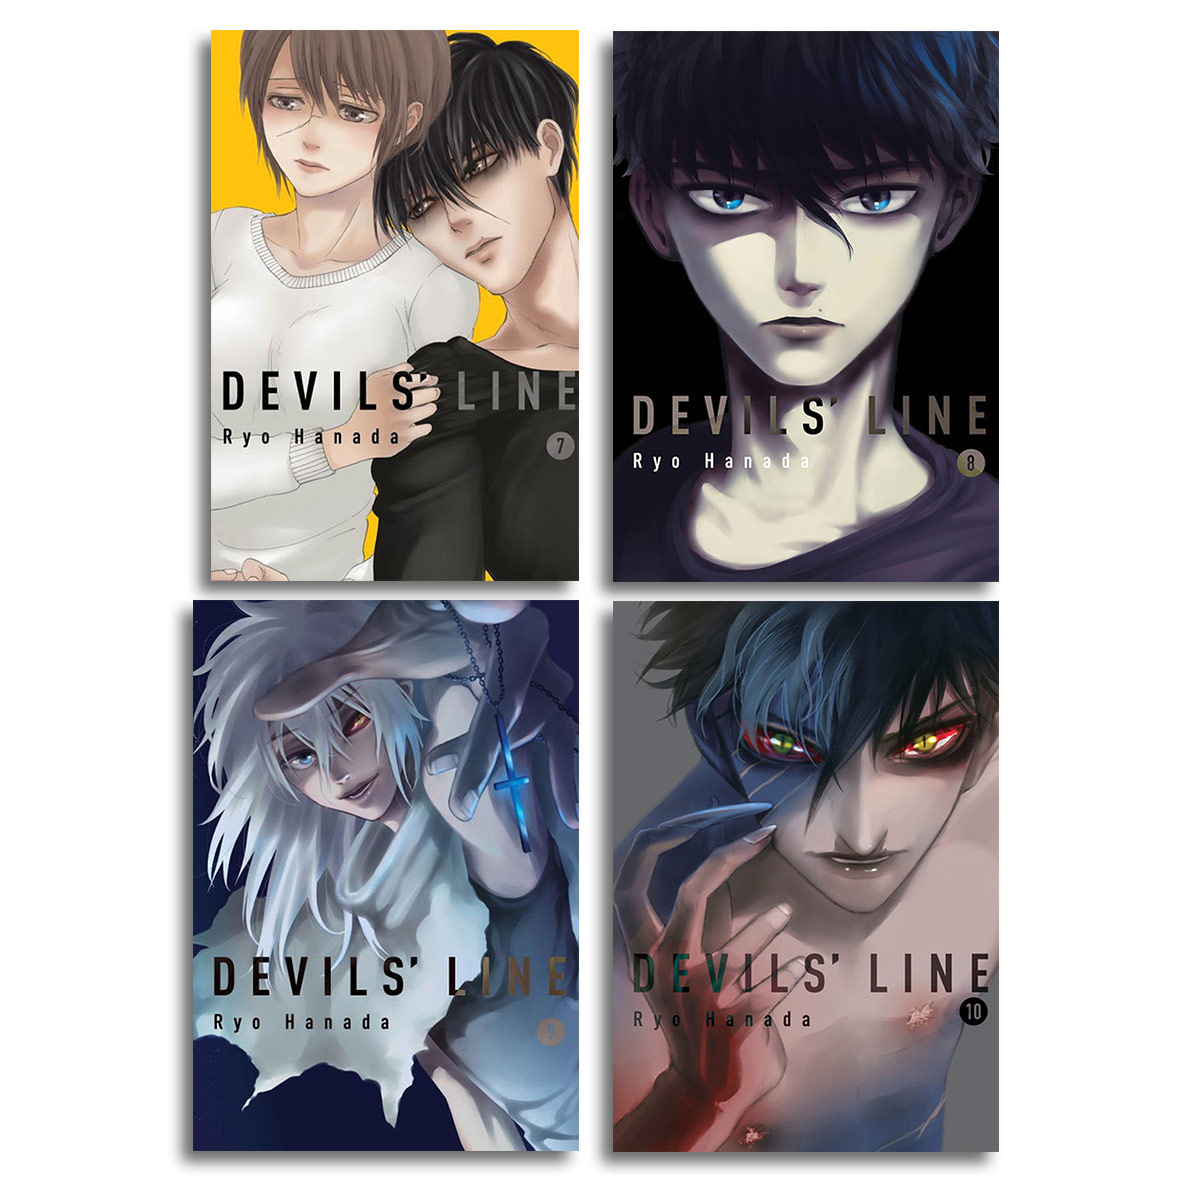 10 Anime Like Devils' Line